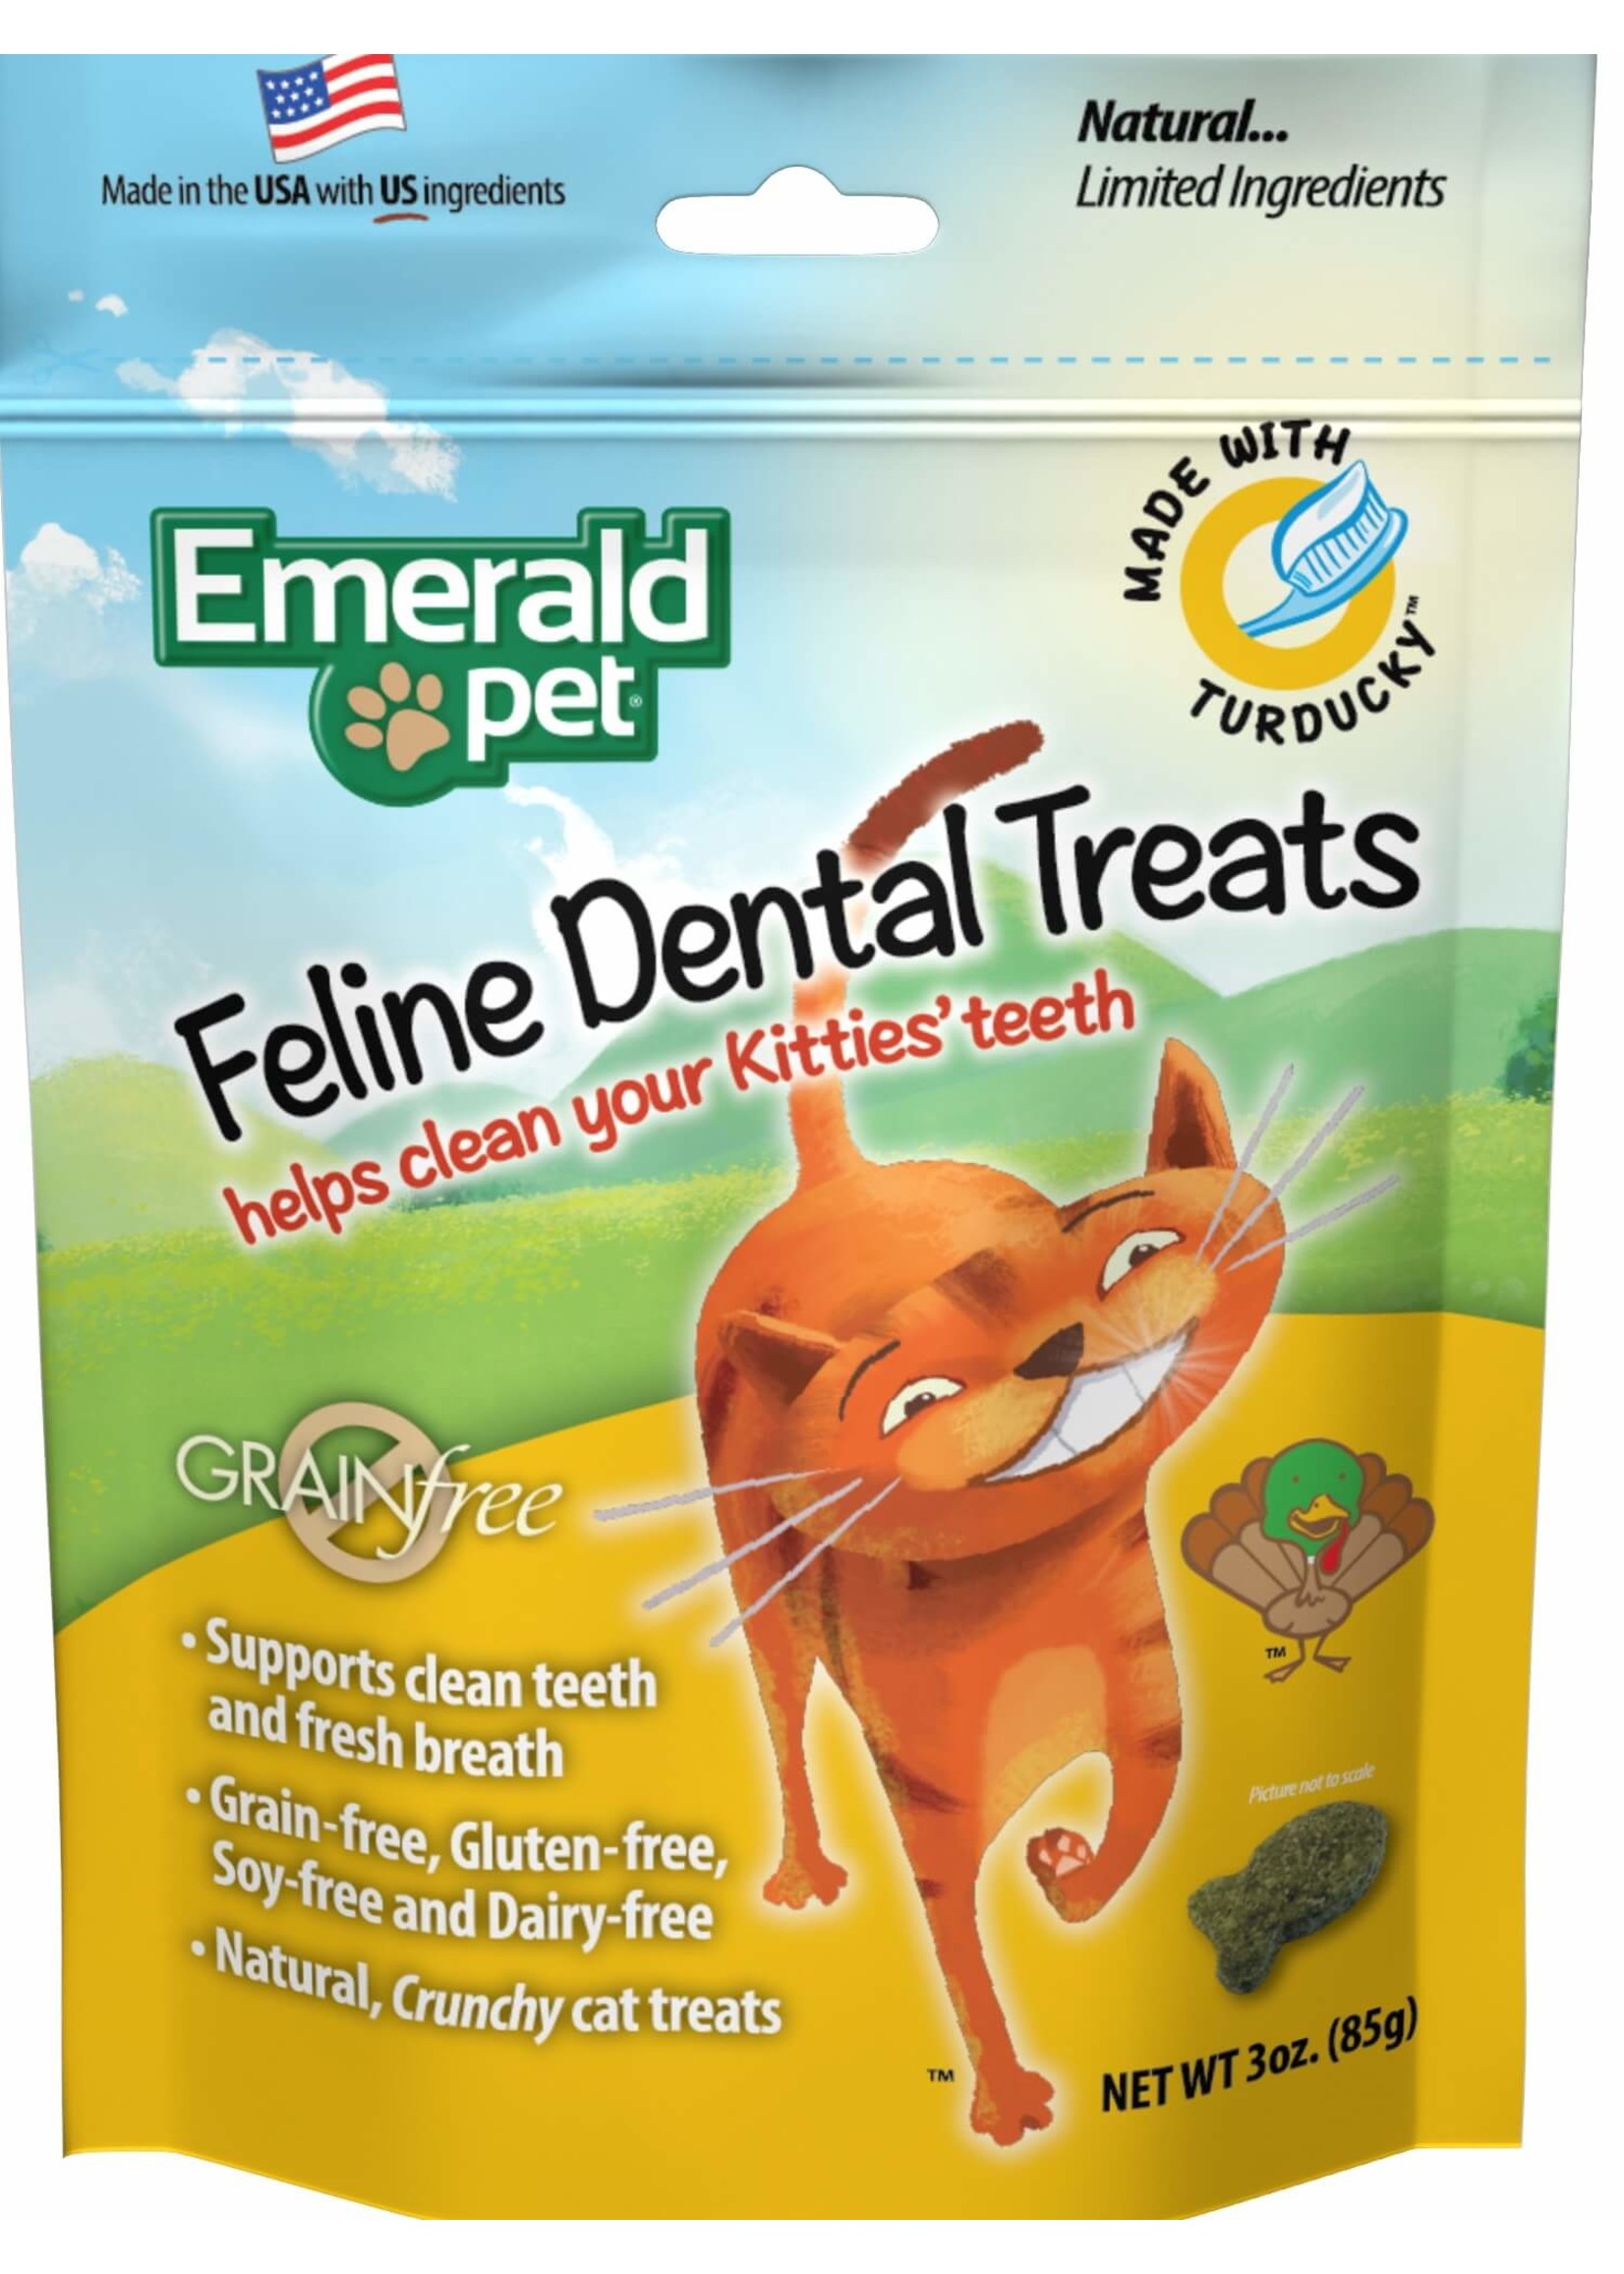 Emerald Pet Emerald Pet Feline Dental Treats